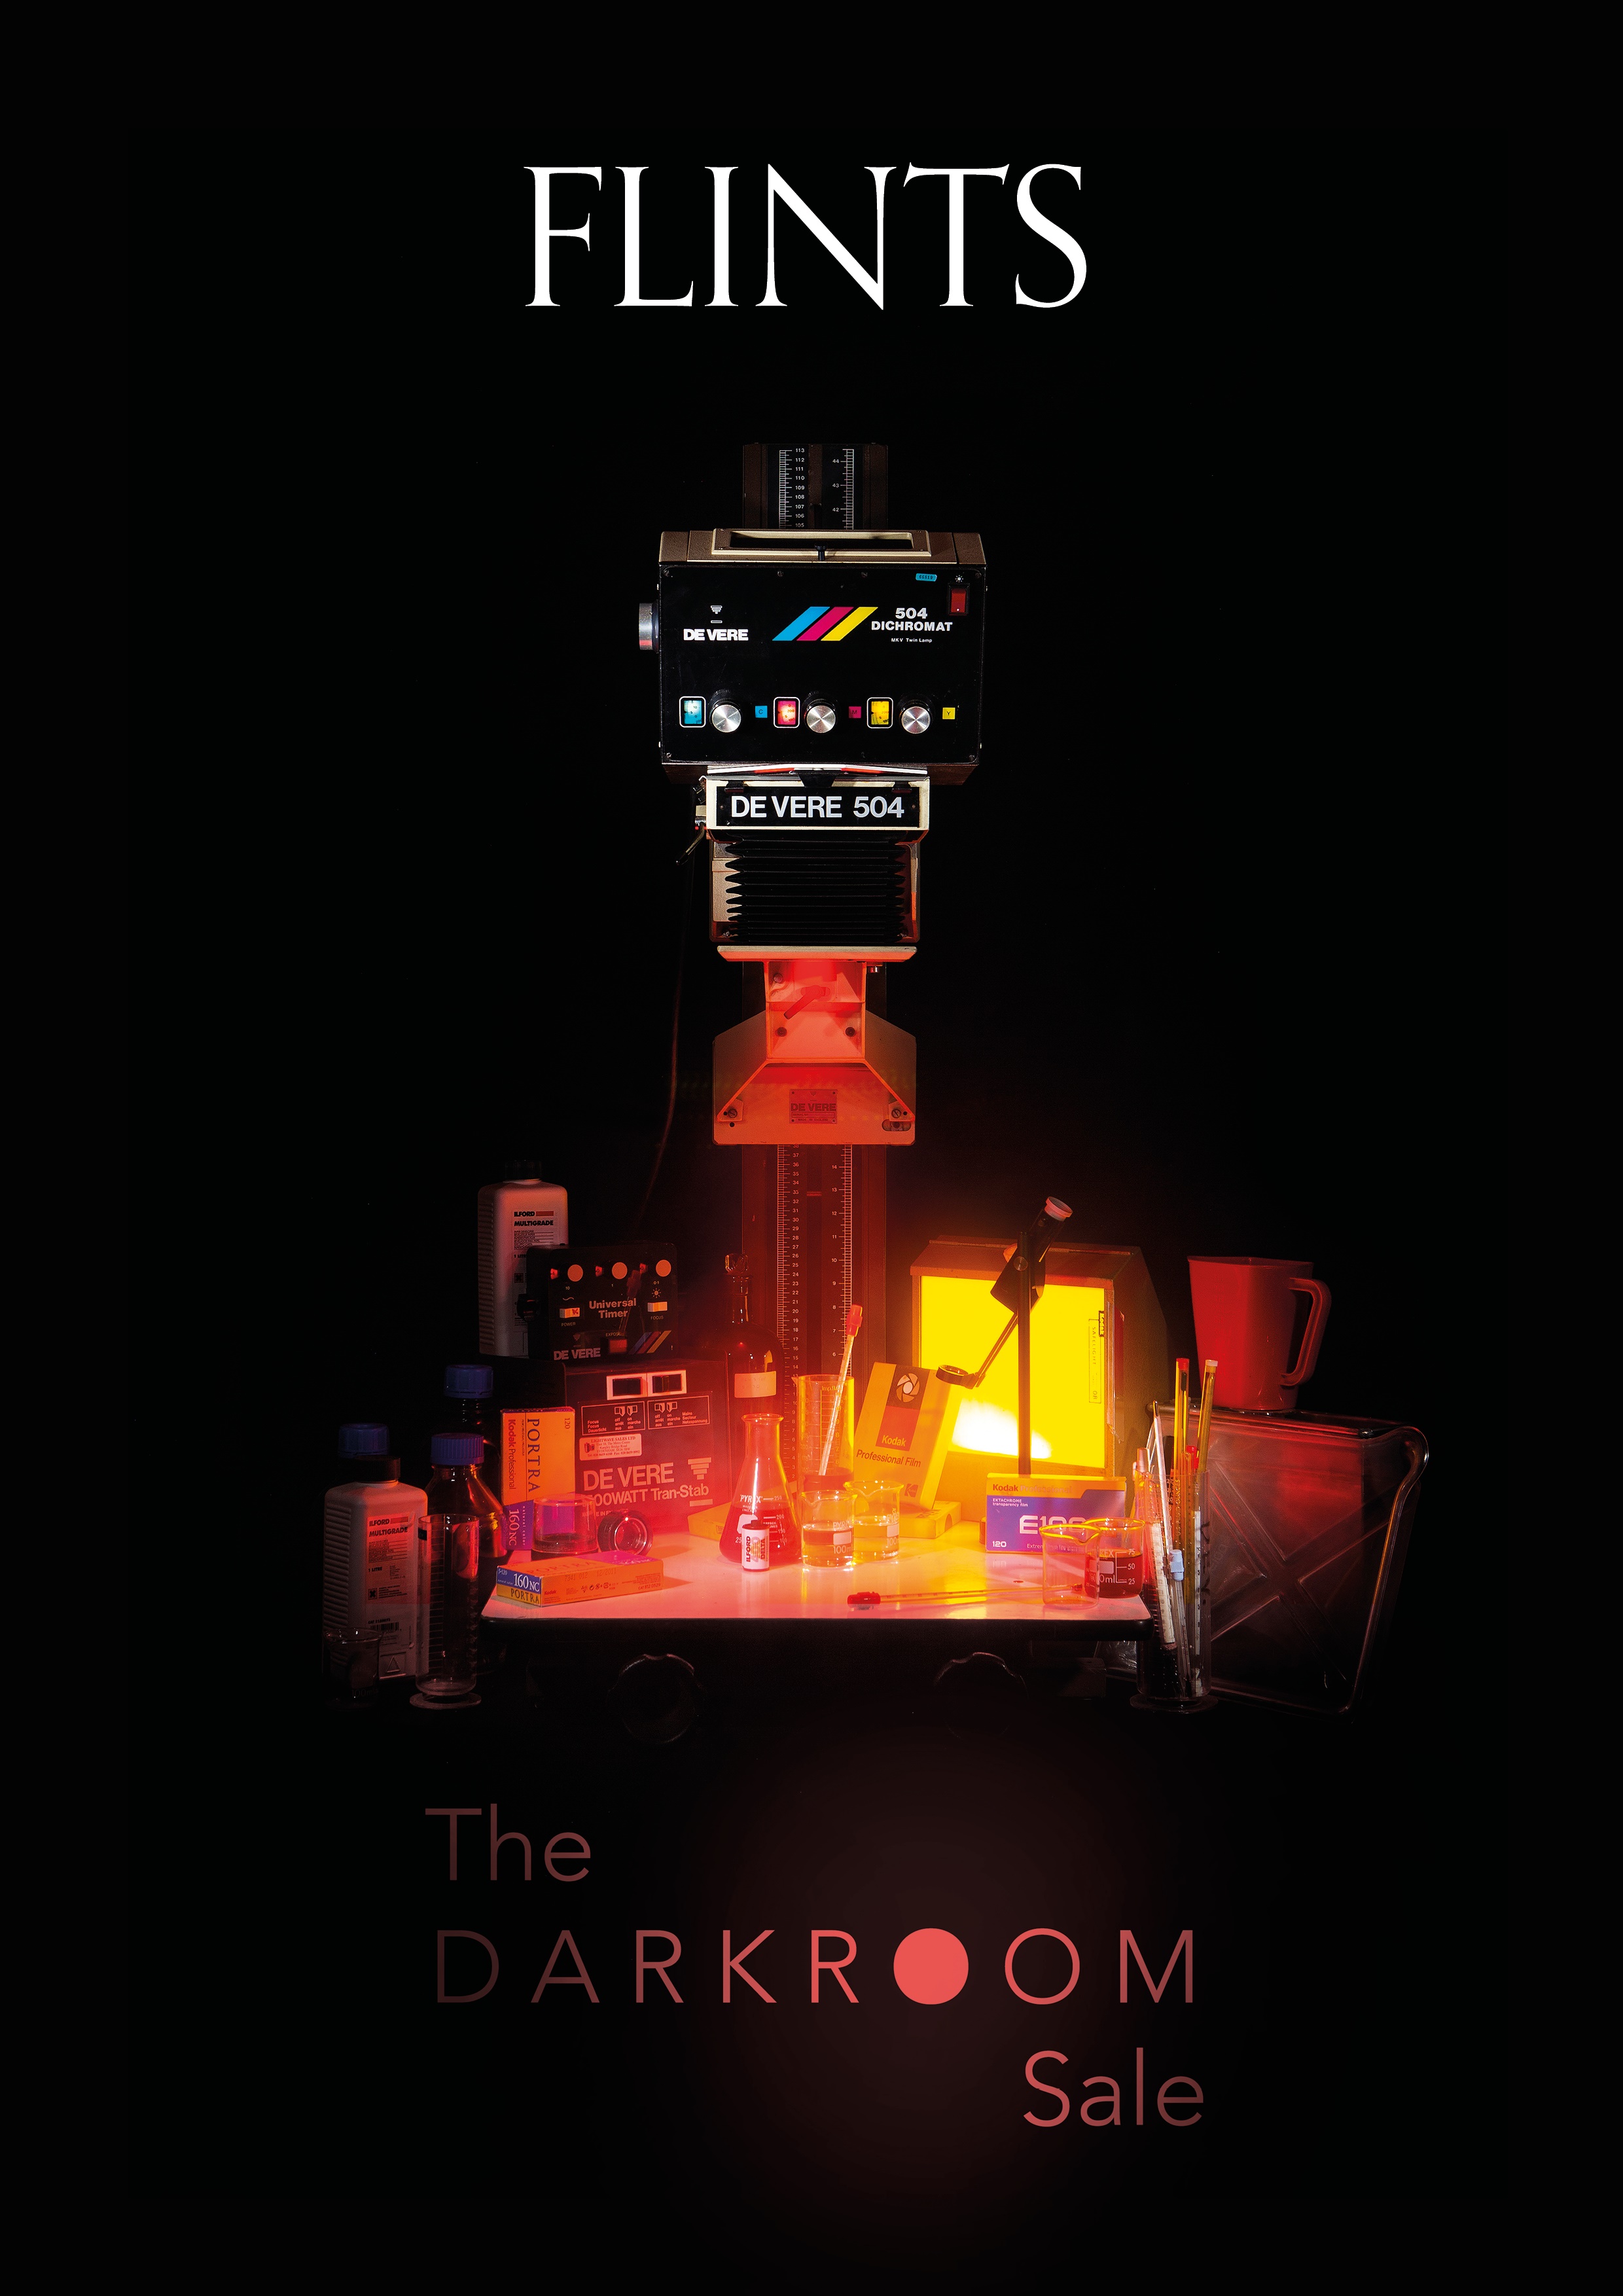 The Darkroom Sale